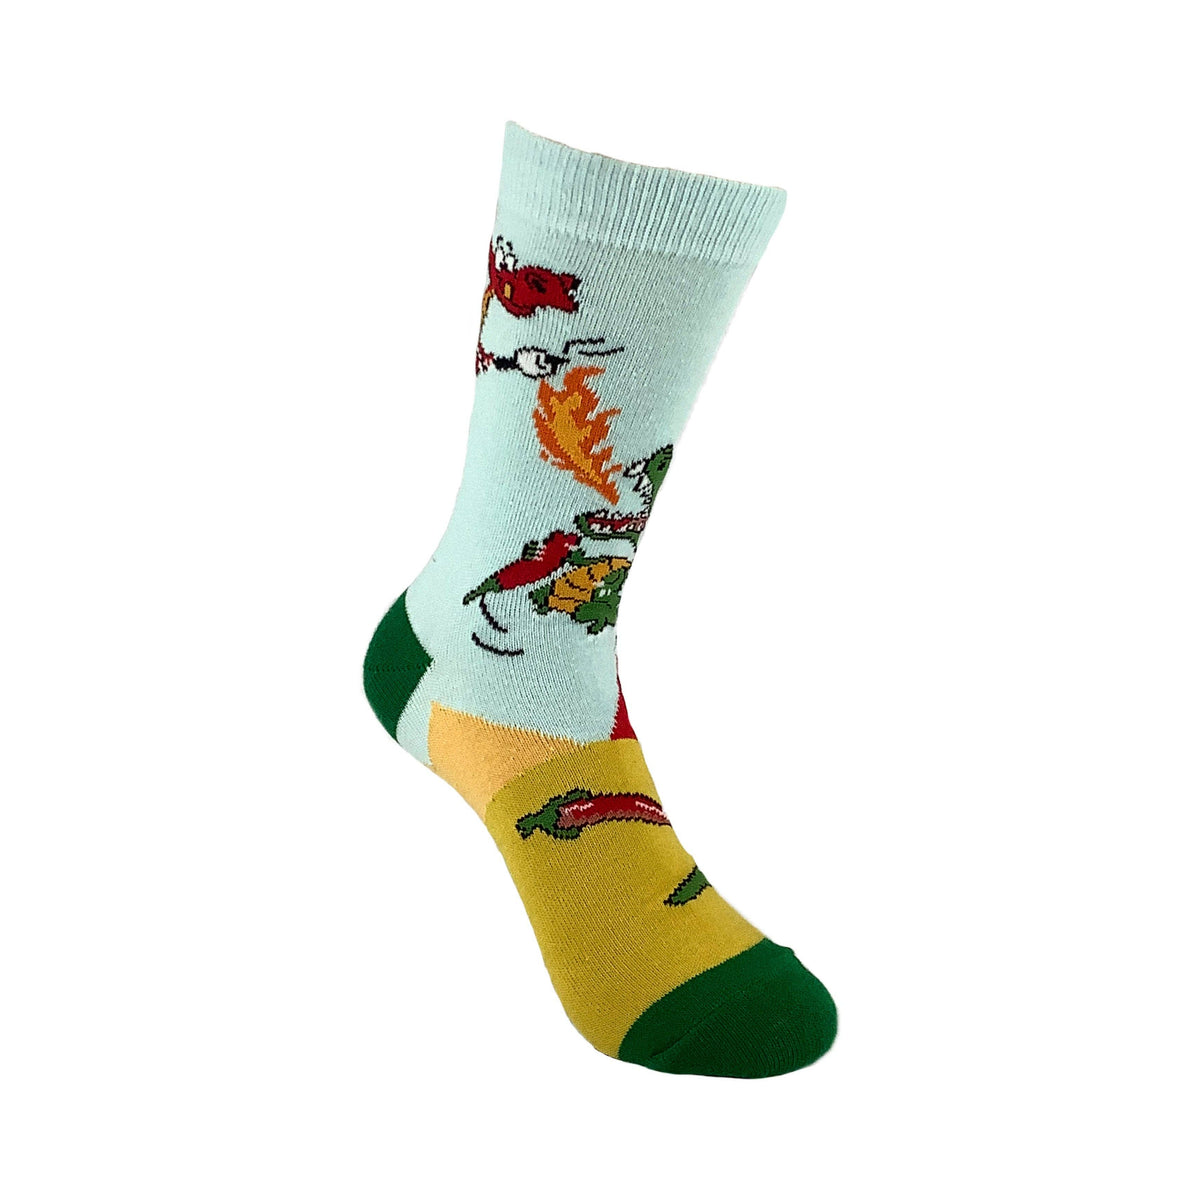 Sock Panda - Dragon Pepper and Marshmallow Party Socks (Adult Small)